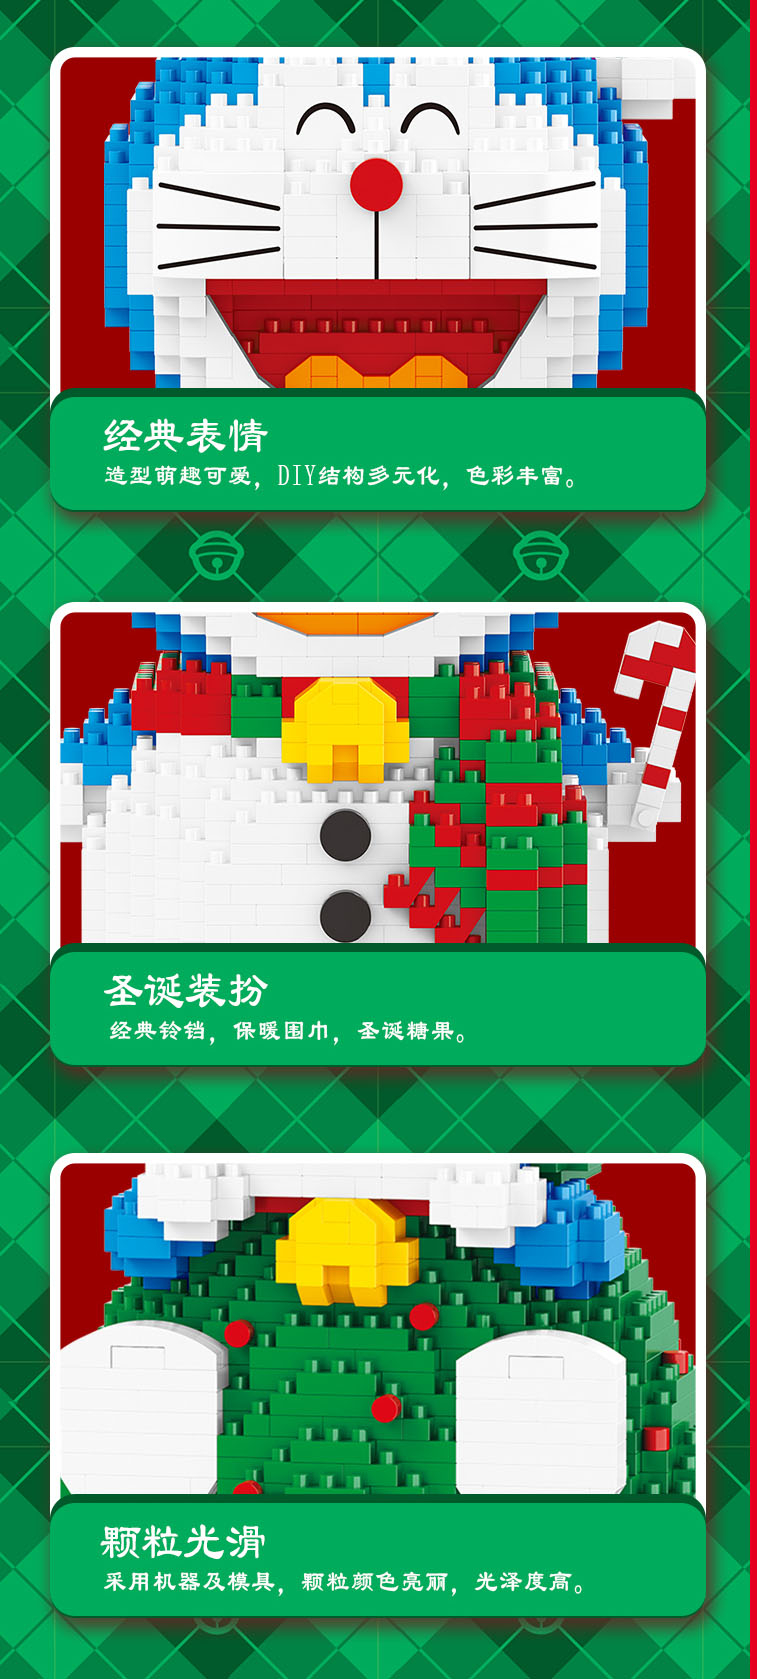 iBlock - Doraemon Christmas